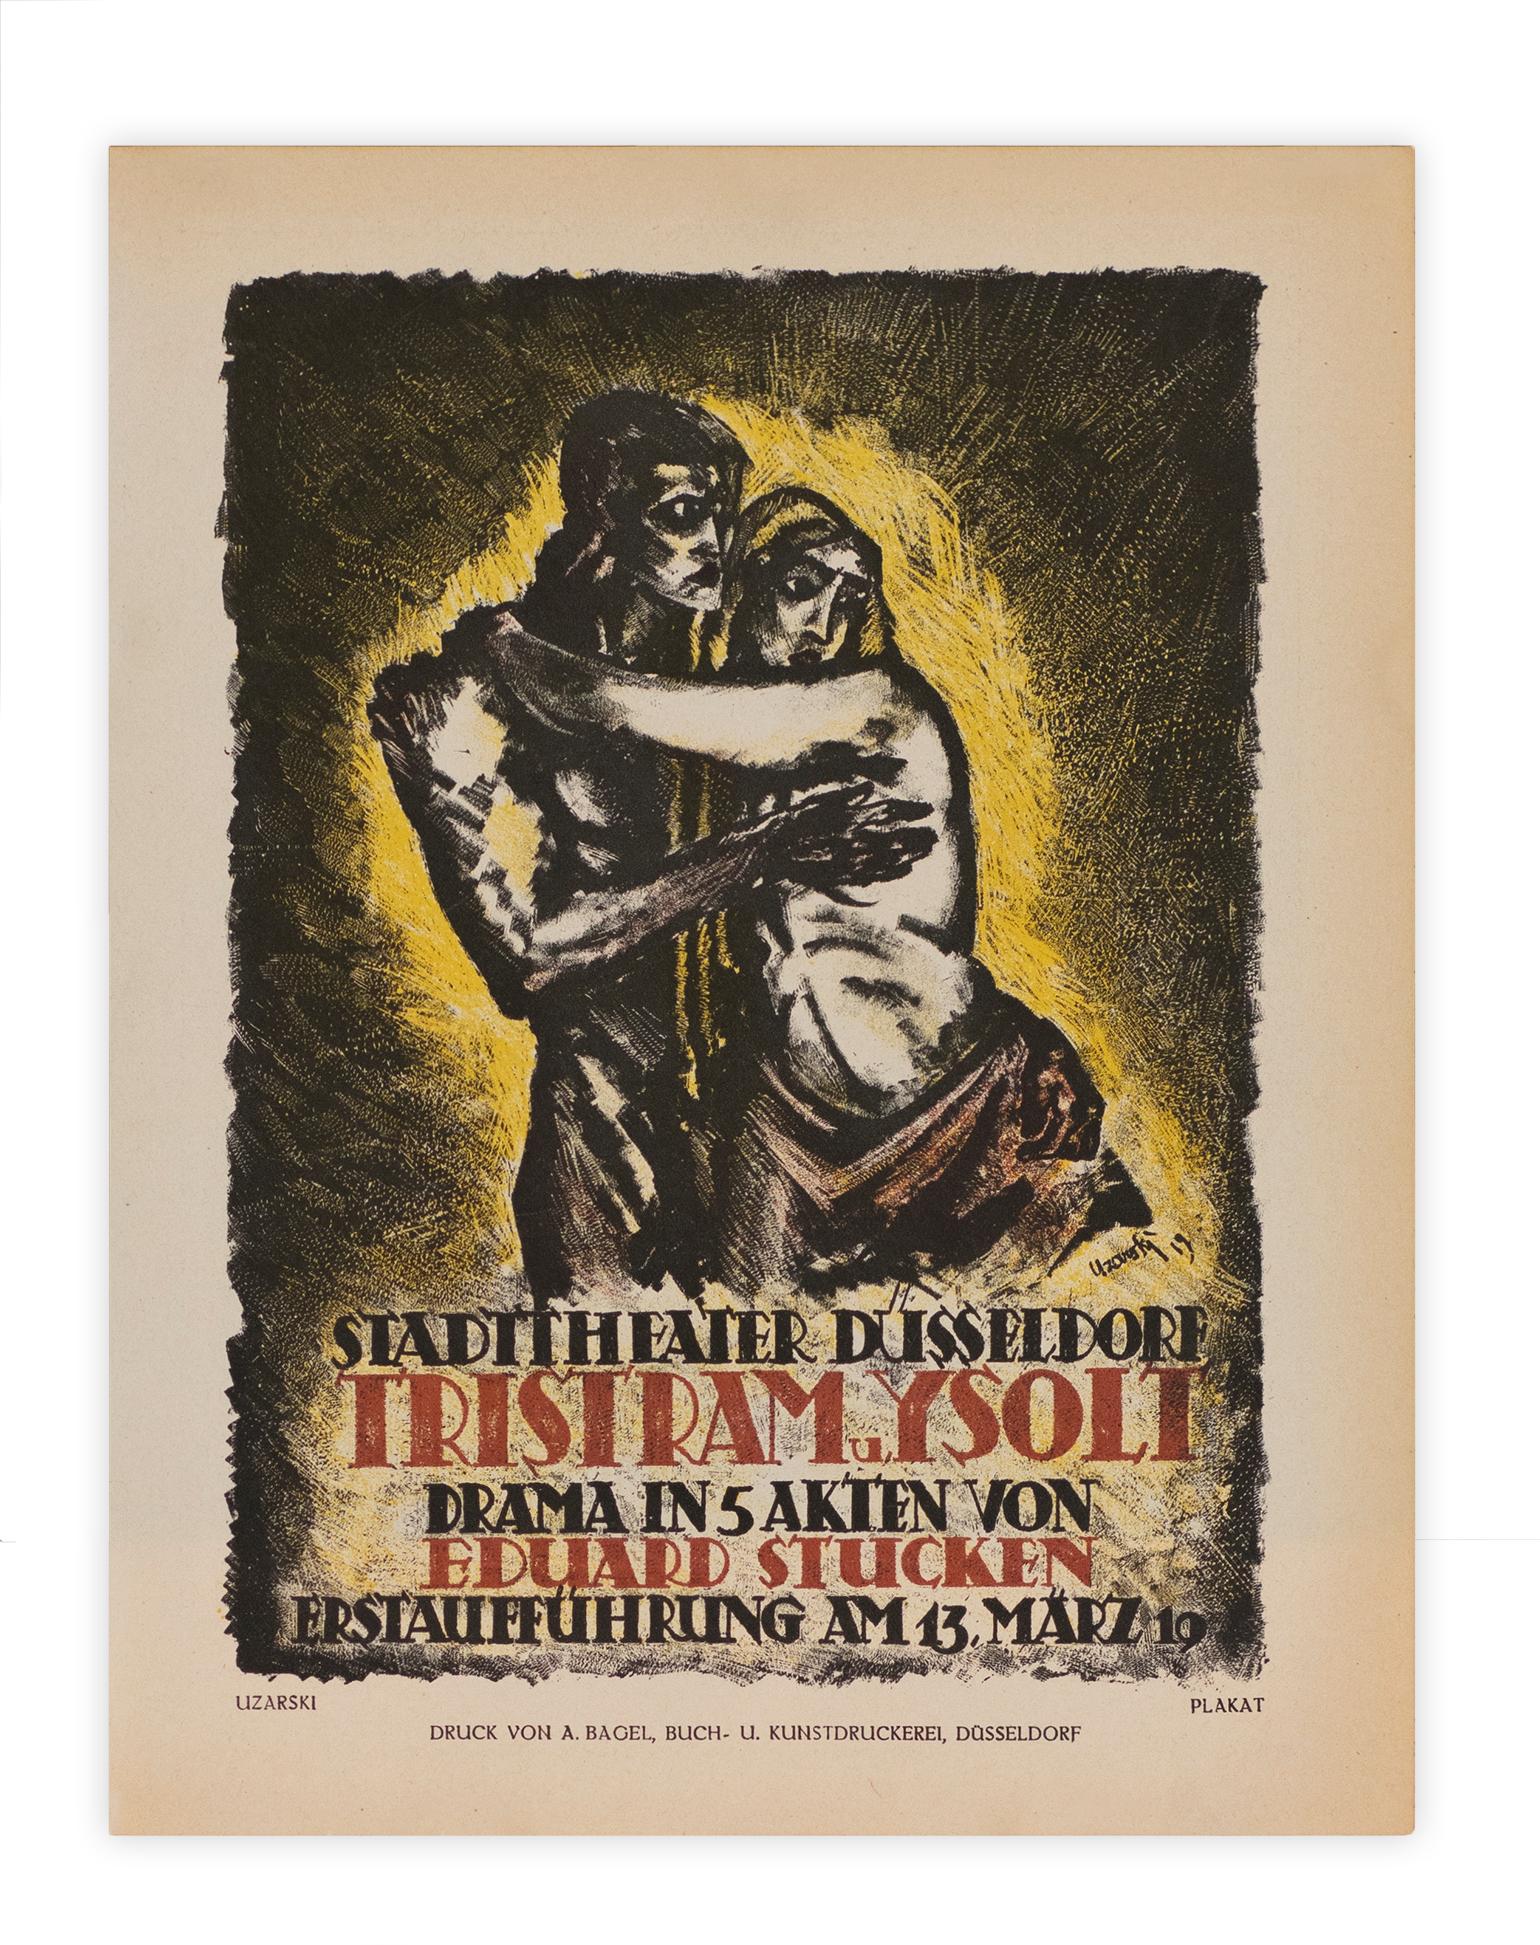 Tristram and Ysoli, Düsseldorf state-theatre, Expressionist stage lithograph - Print by Adolf Uzarski